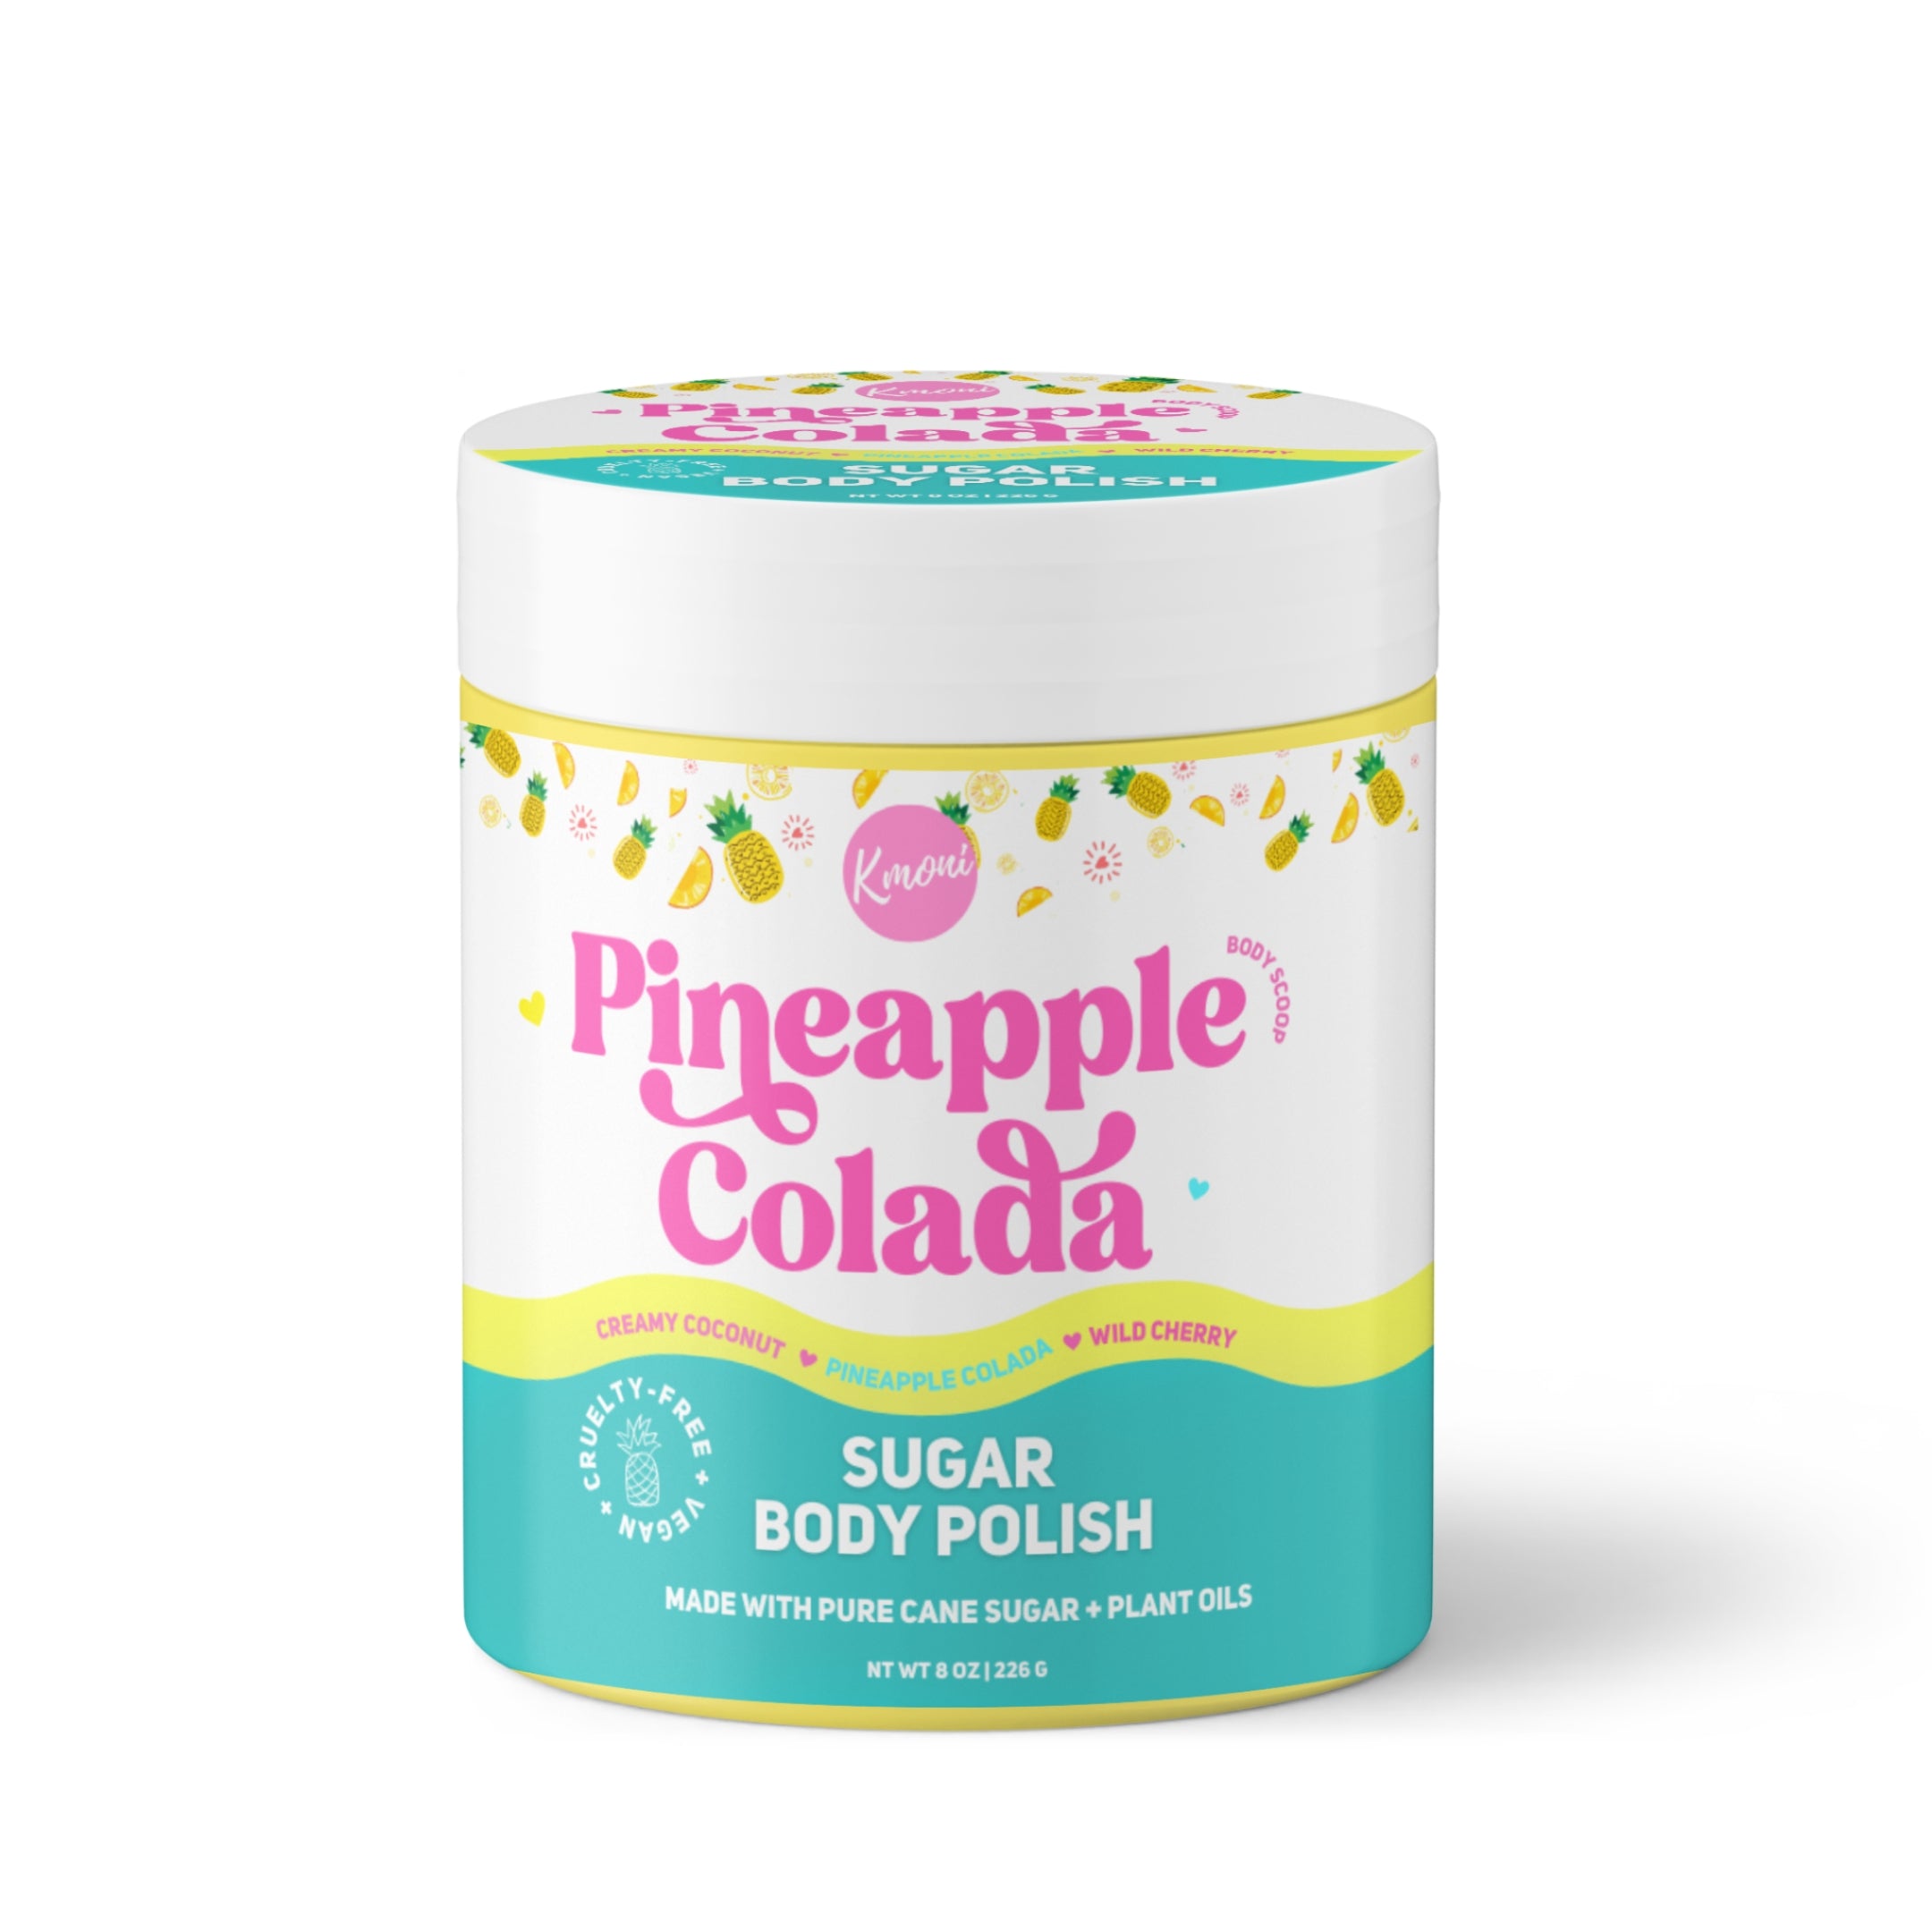 Pineapple Colada Sugar Body Polish